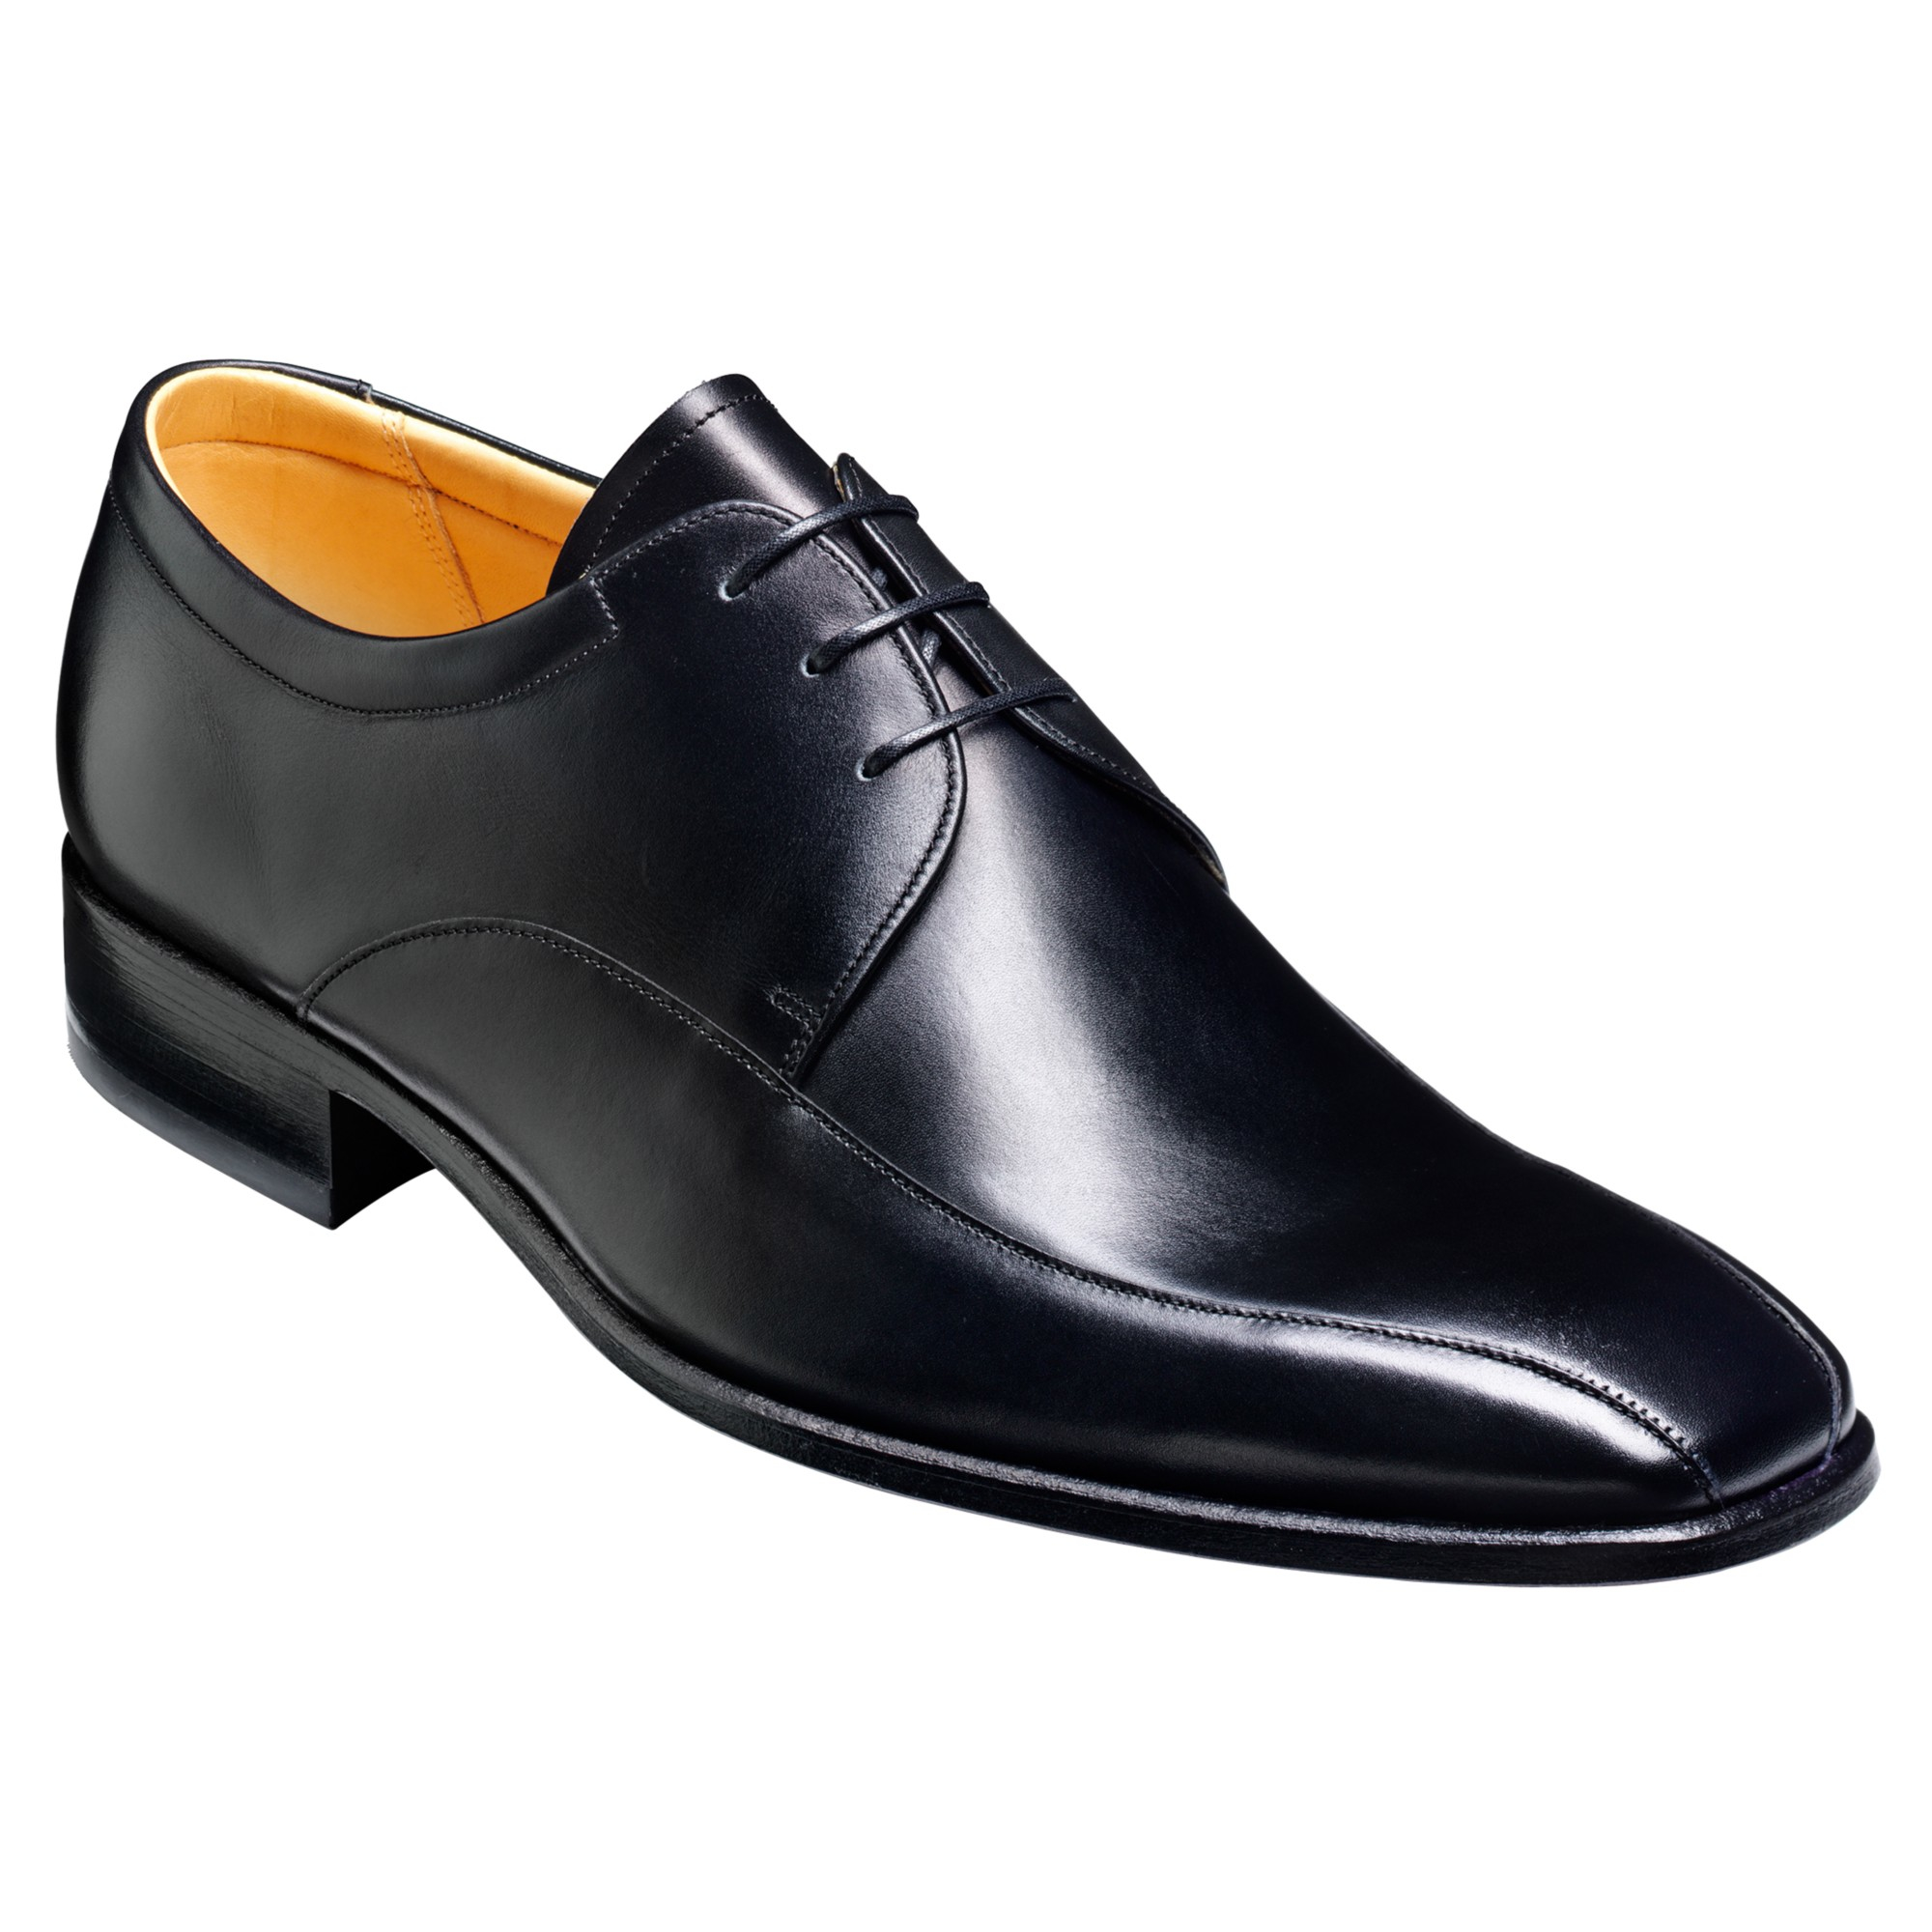 Barker Ross Leather Derby Shoes in Black for Men - Lyst